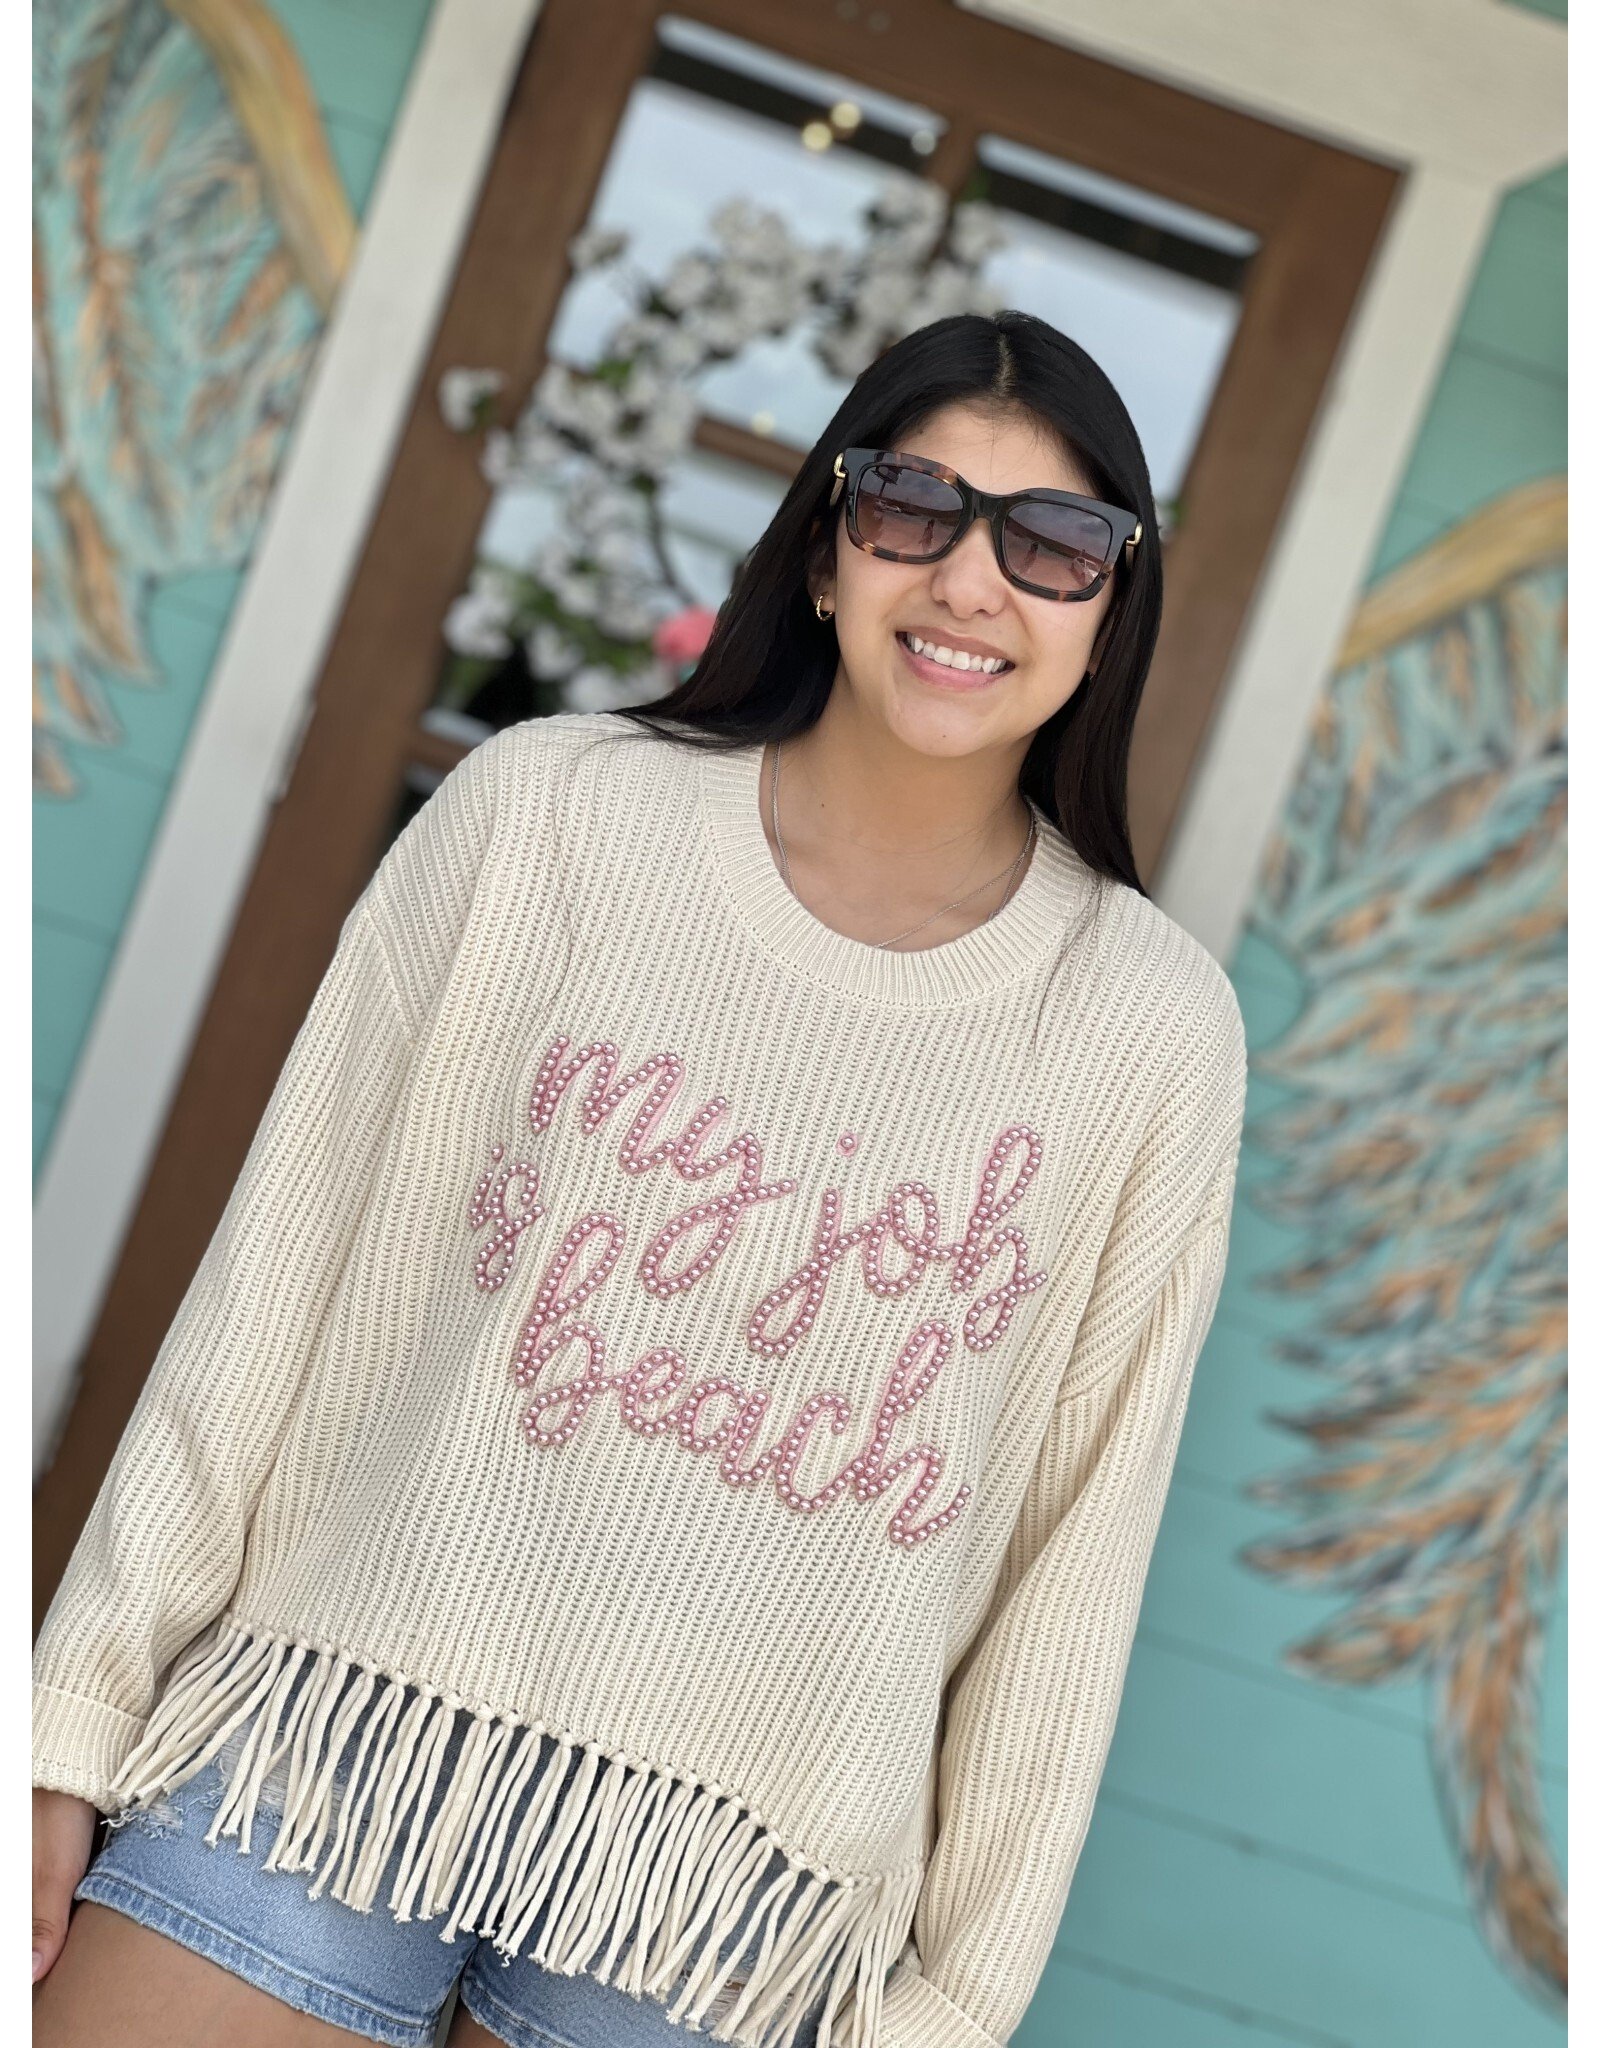 Queen of Sparkles My Job is Beach Sweater